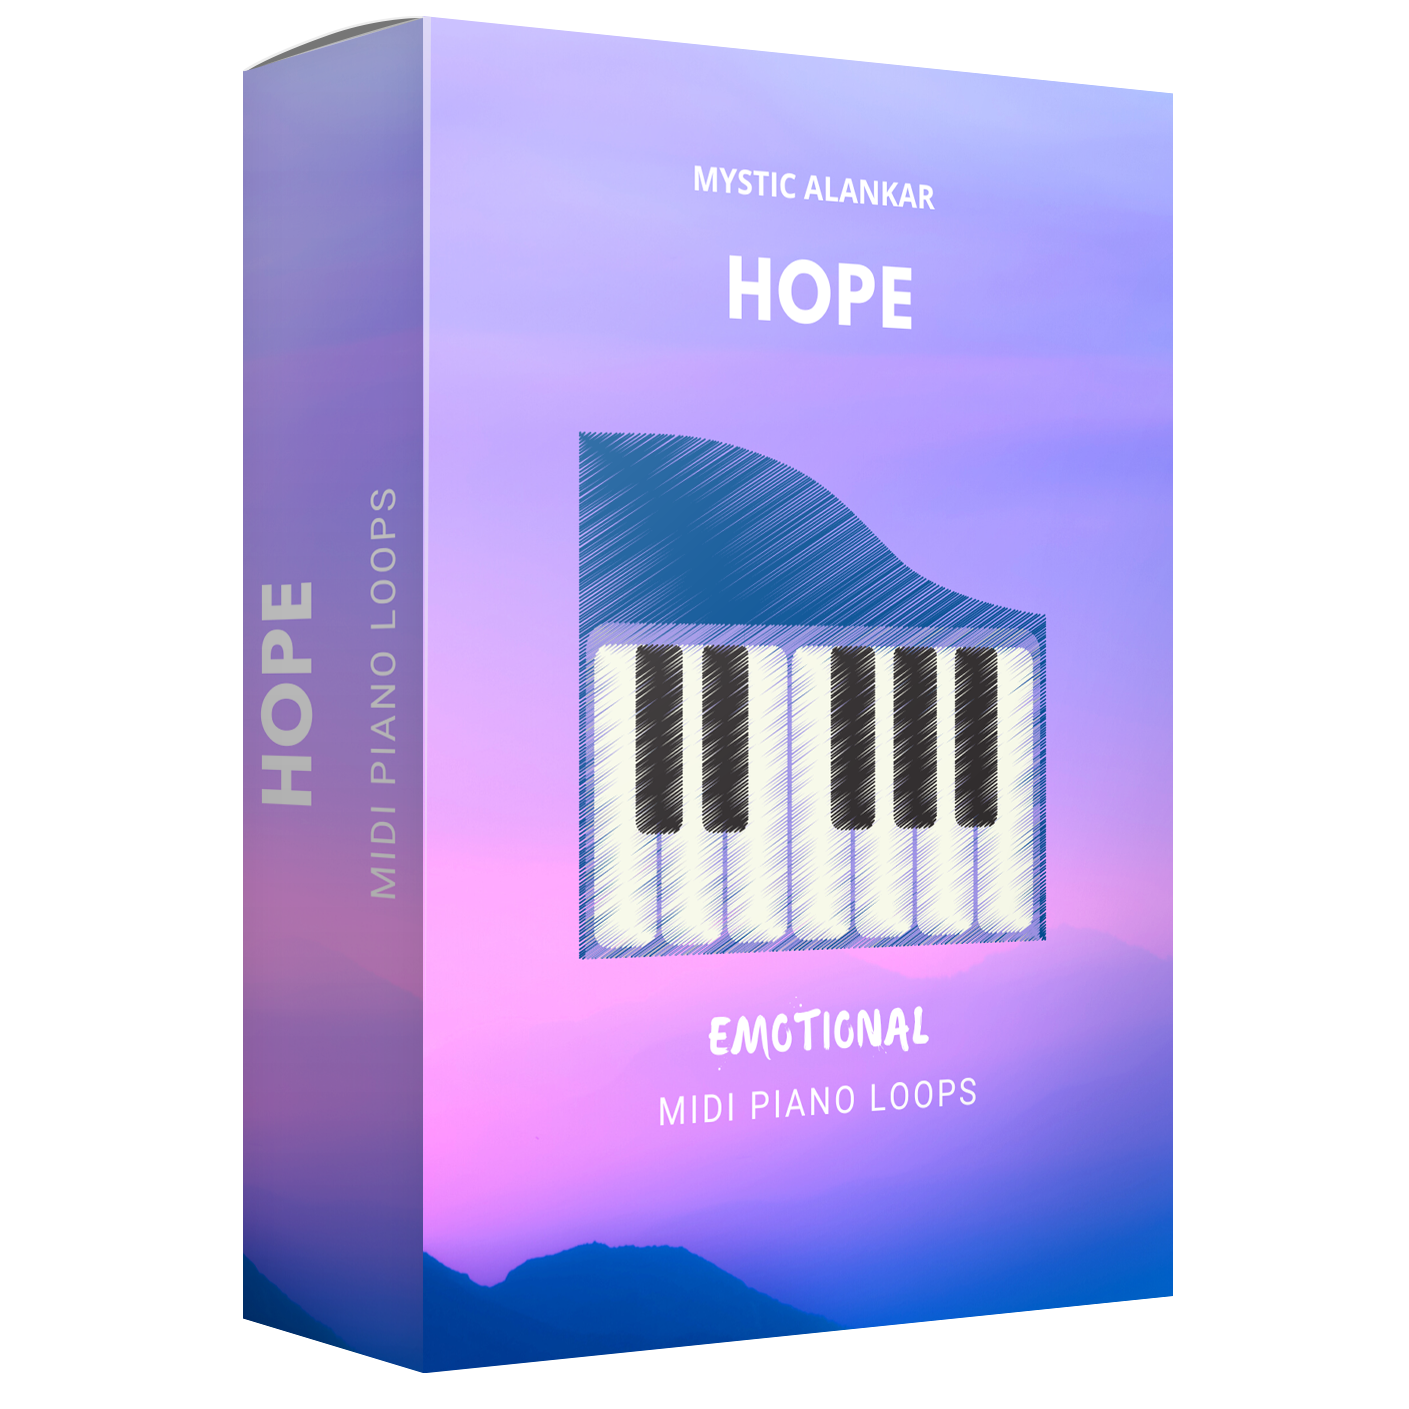 Hope - MIDI Piano Loops